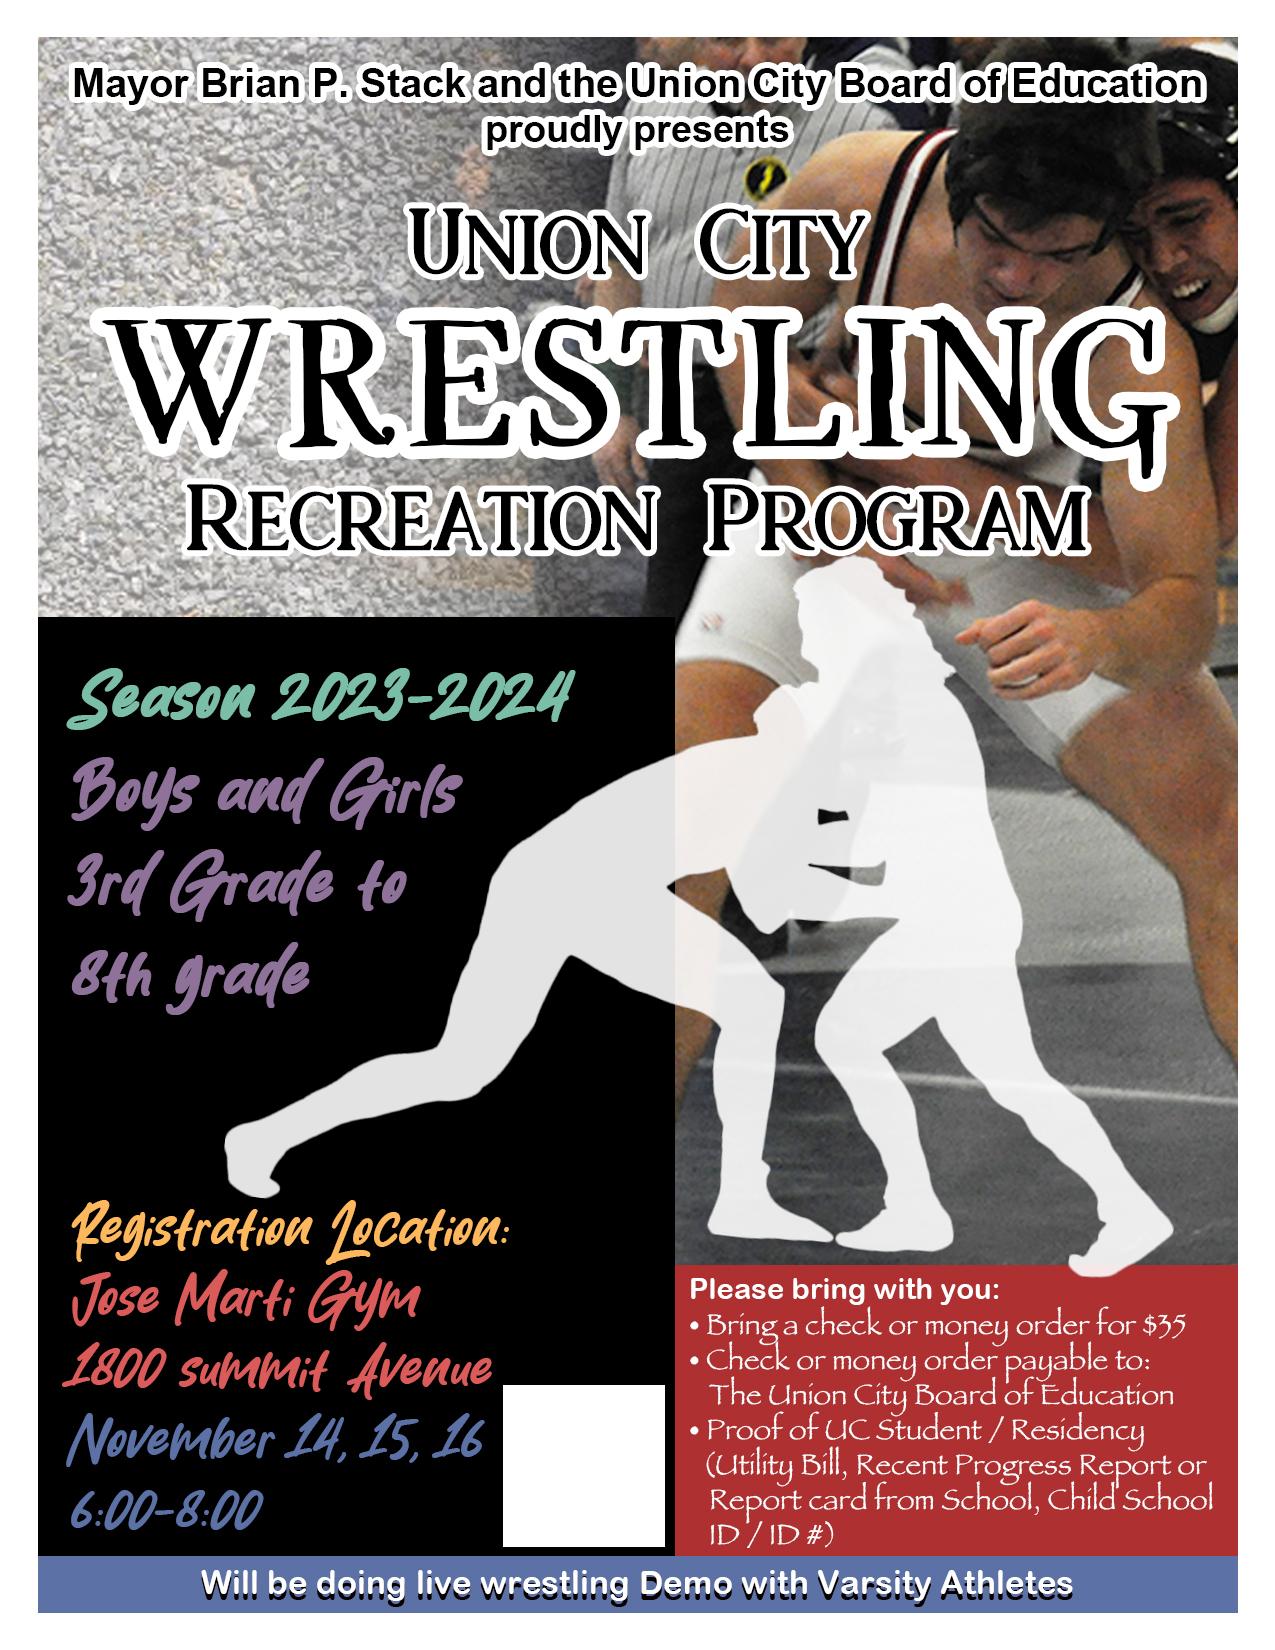 Union City Wrestling Recreation Program Flyer